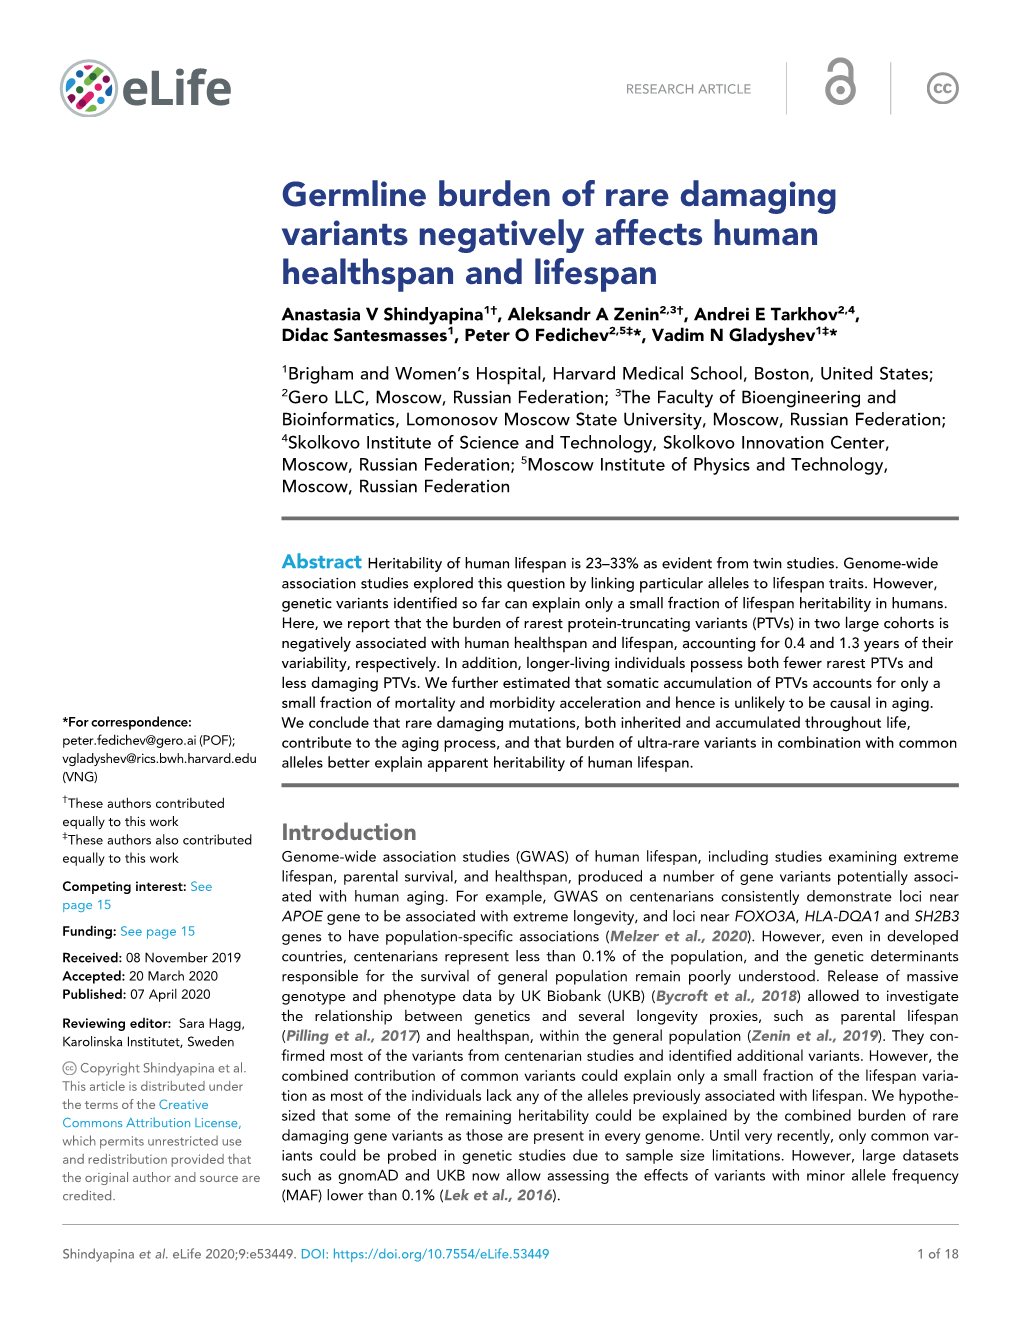 Germline Burden of Rare Damaging Variants Negatively Affects Human